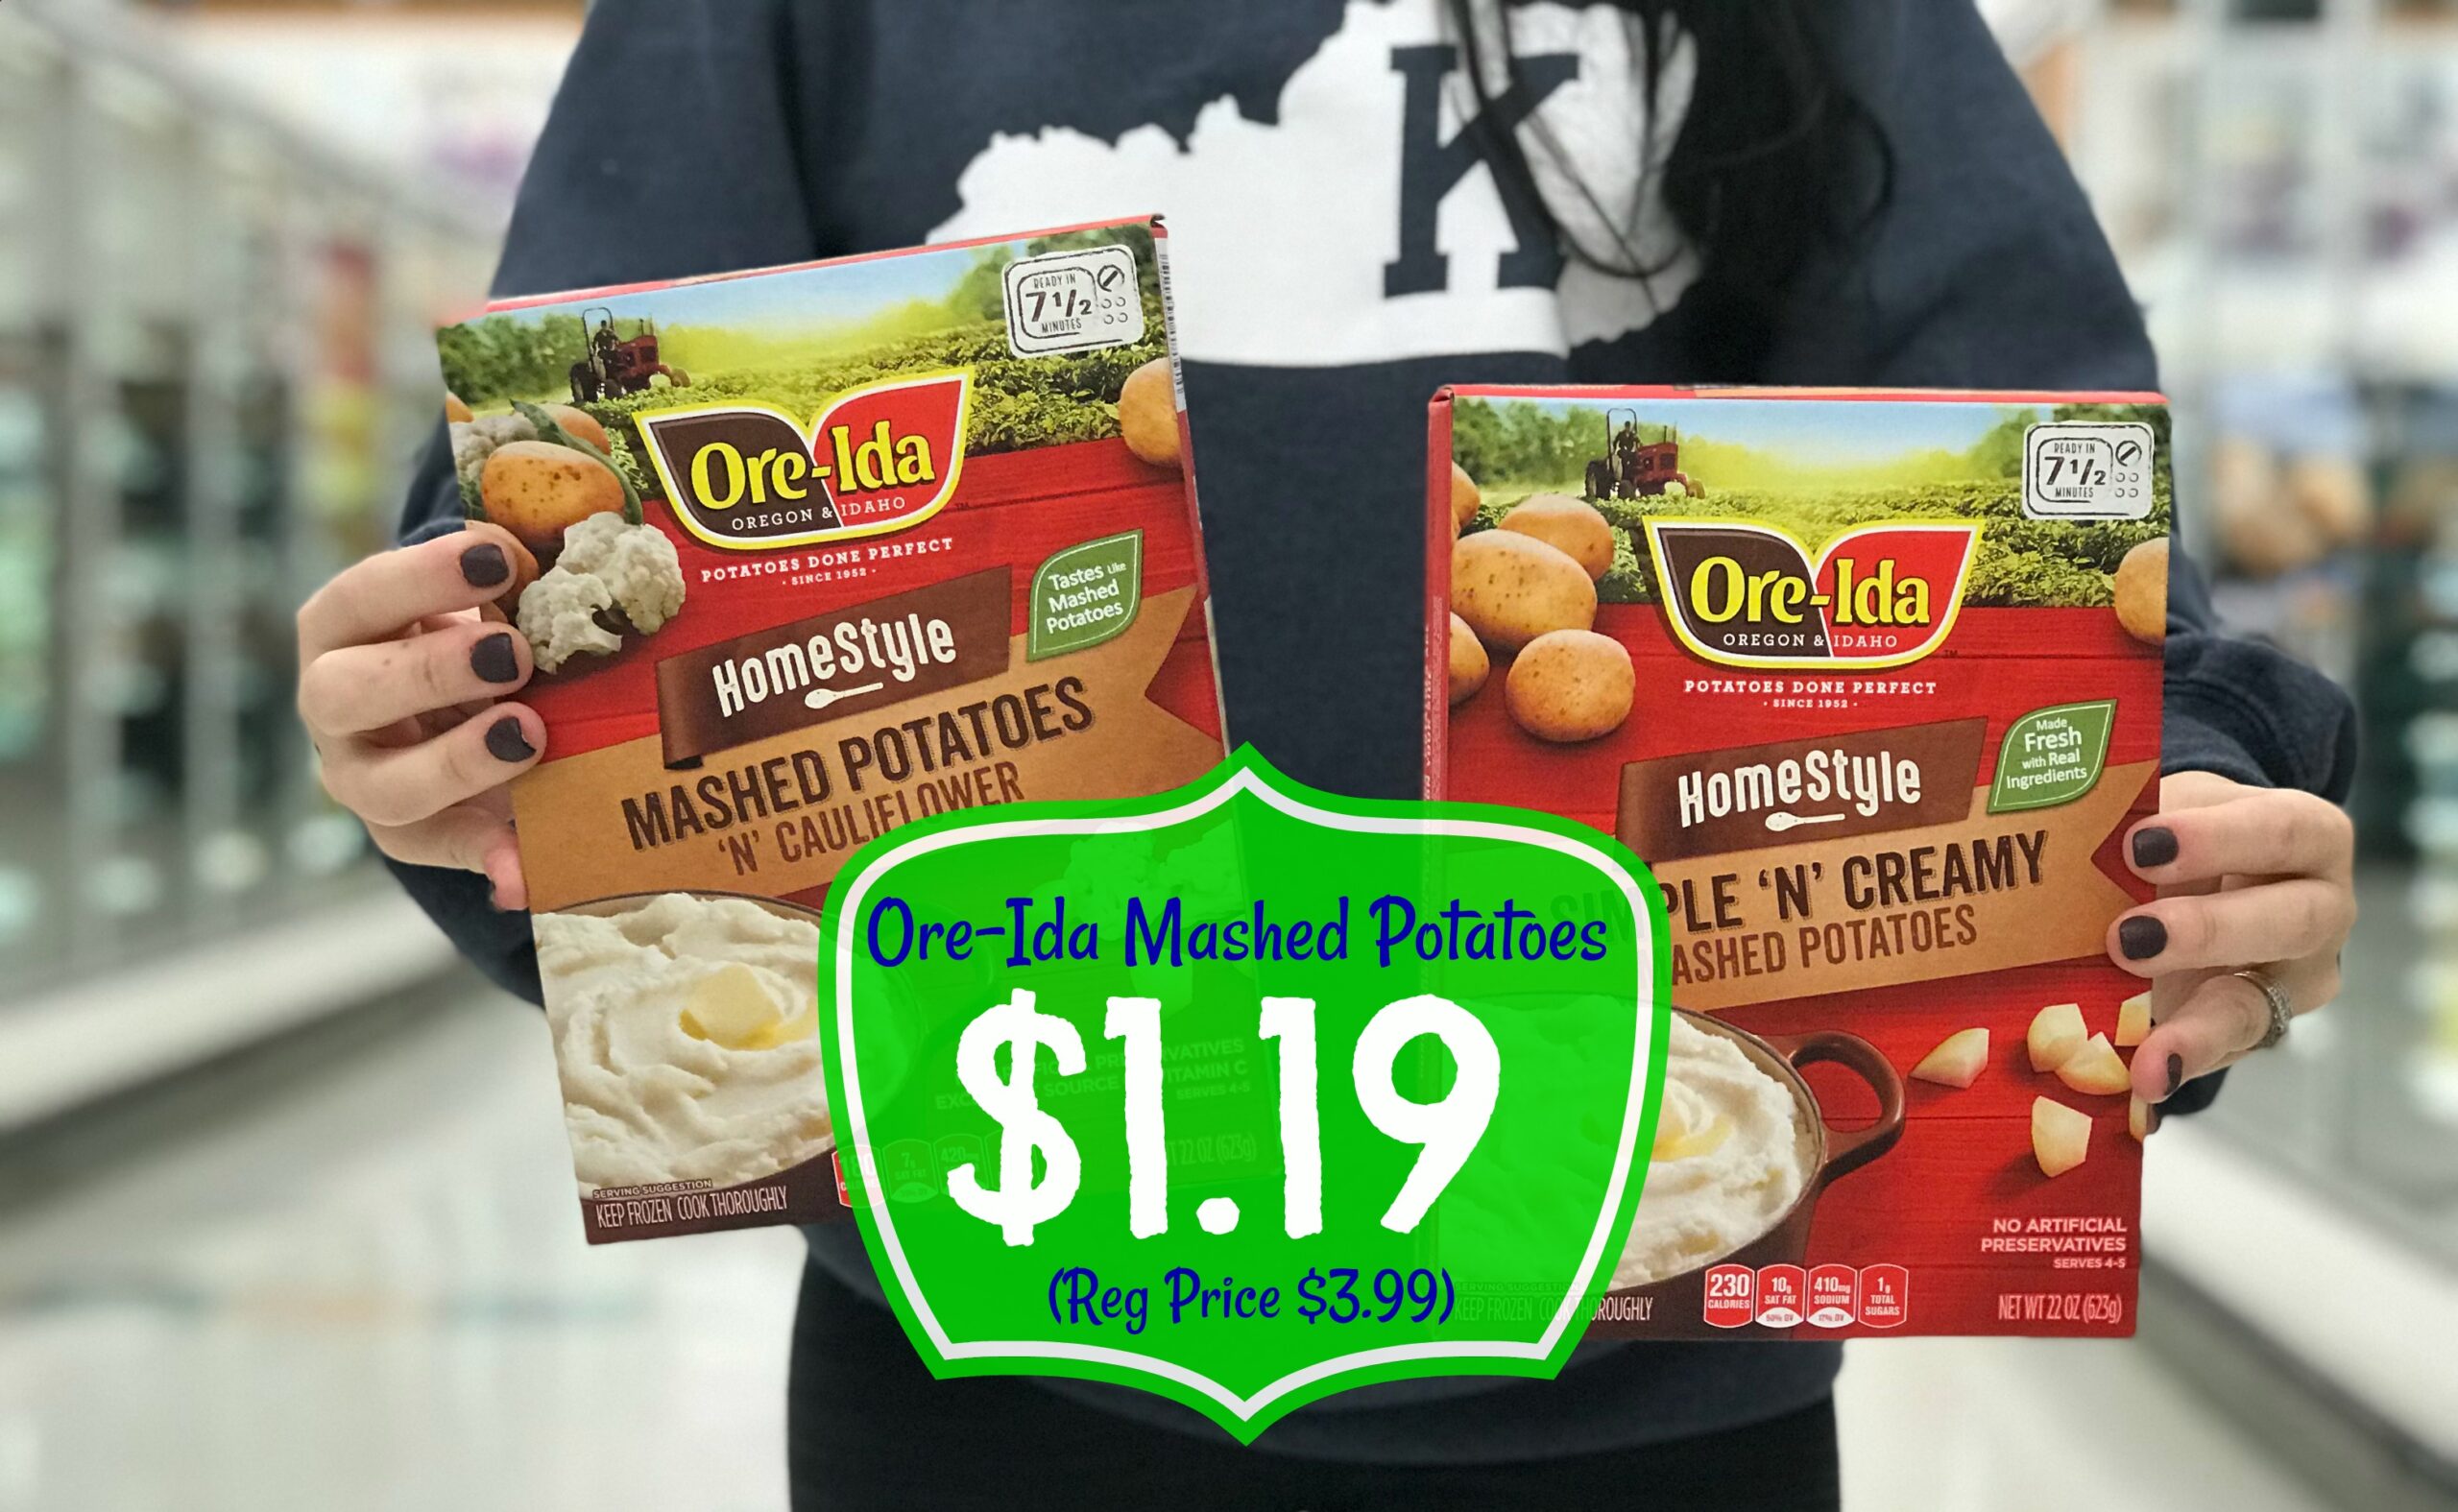 OreIda Mashed Potatoes (Frozen) JUST 1.19 at Kroger! (Reg Price 3.99